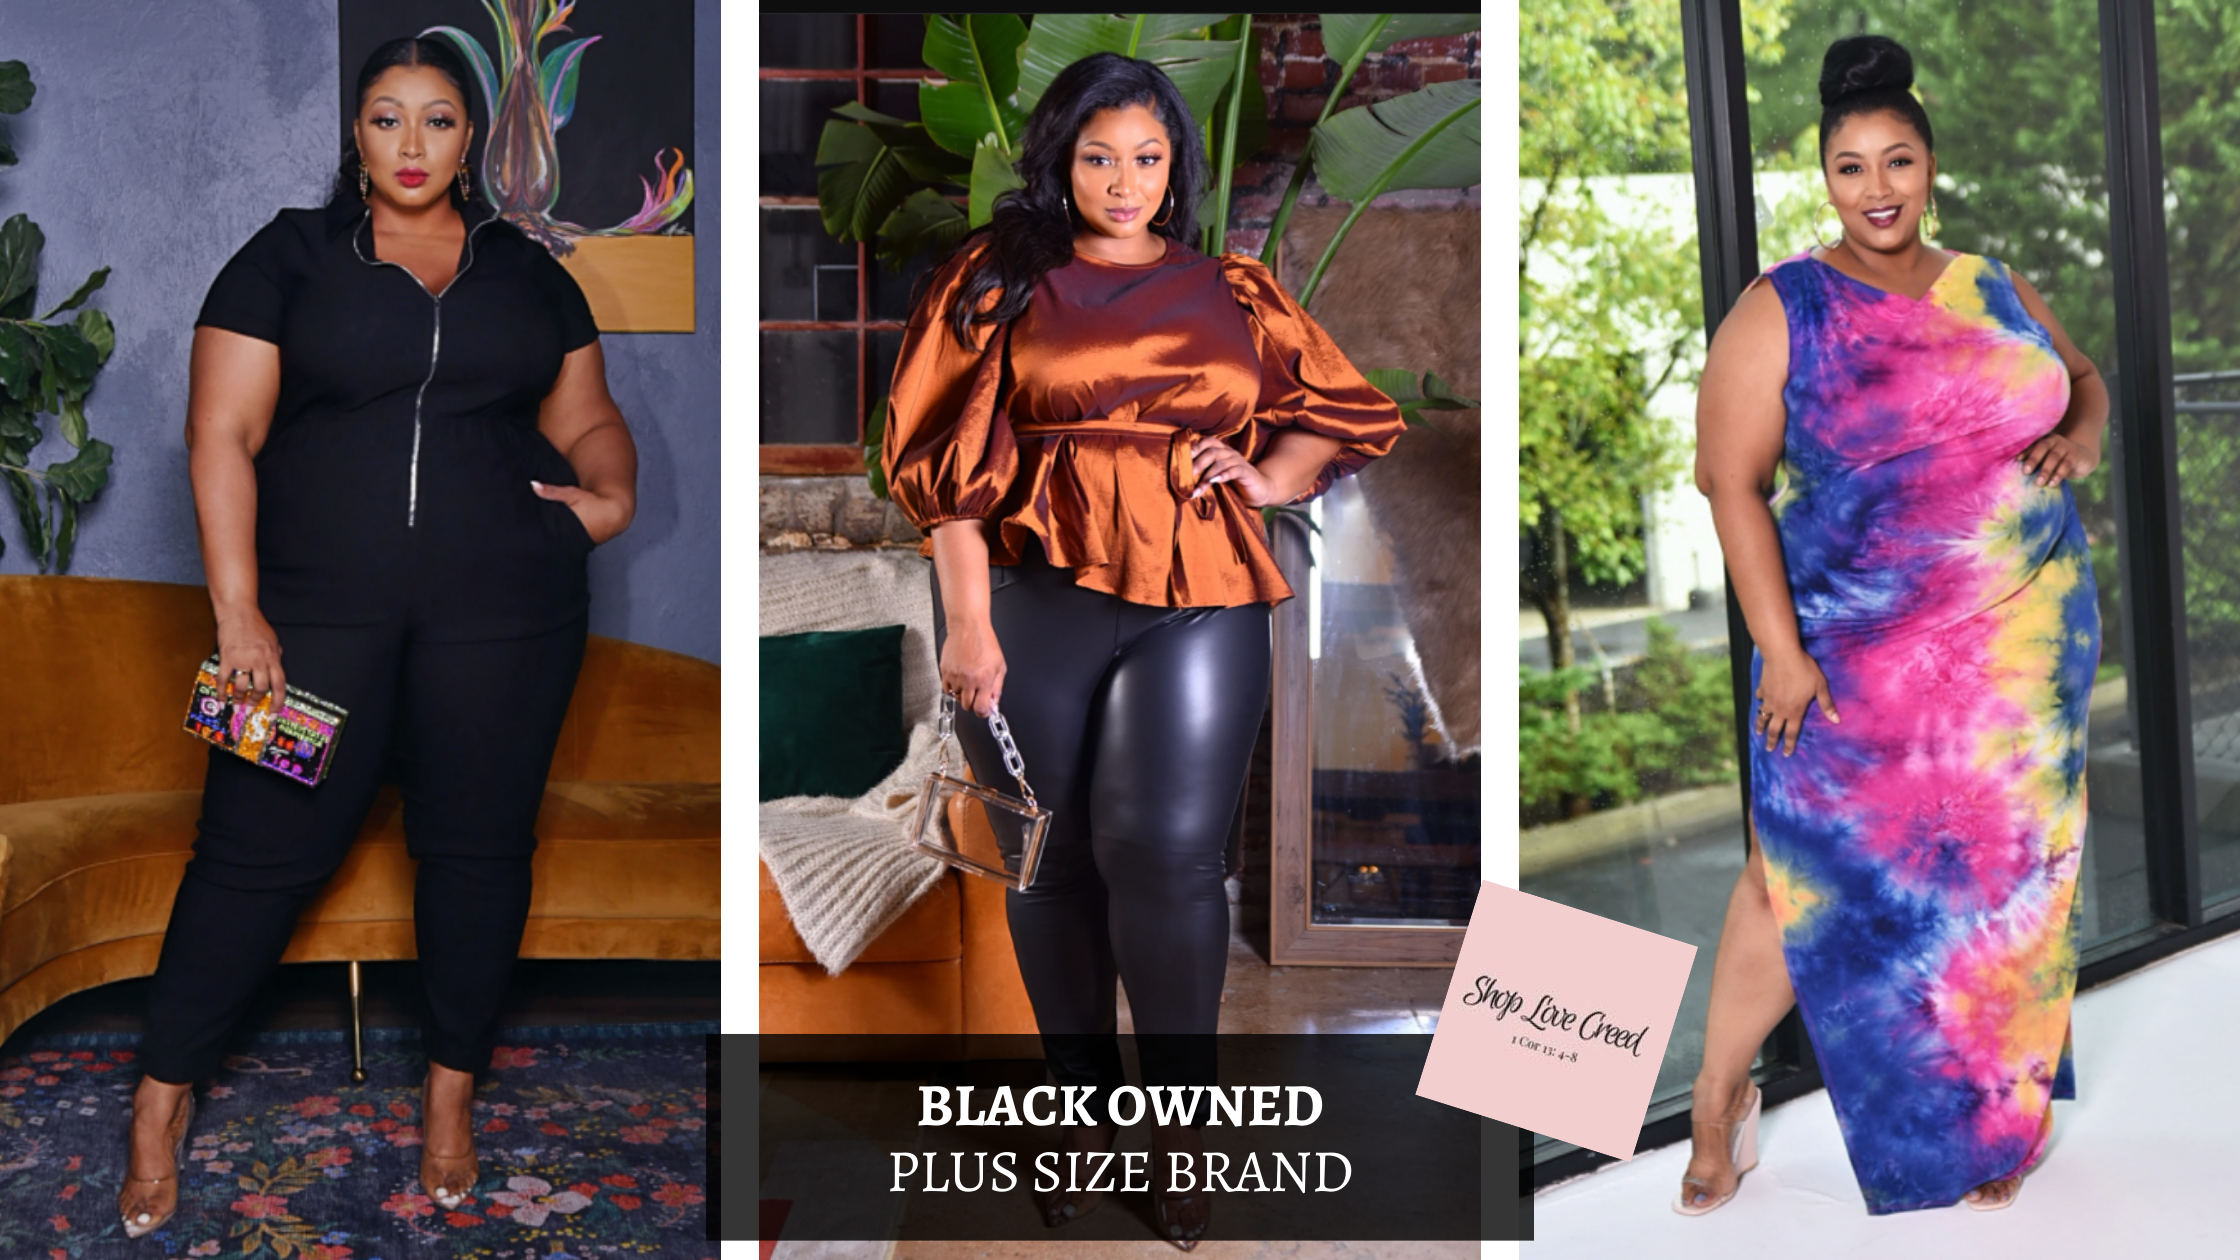 Black owned plus size fashion brand